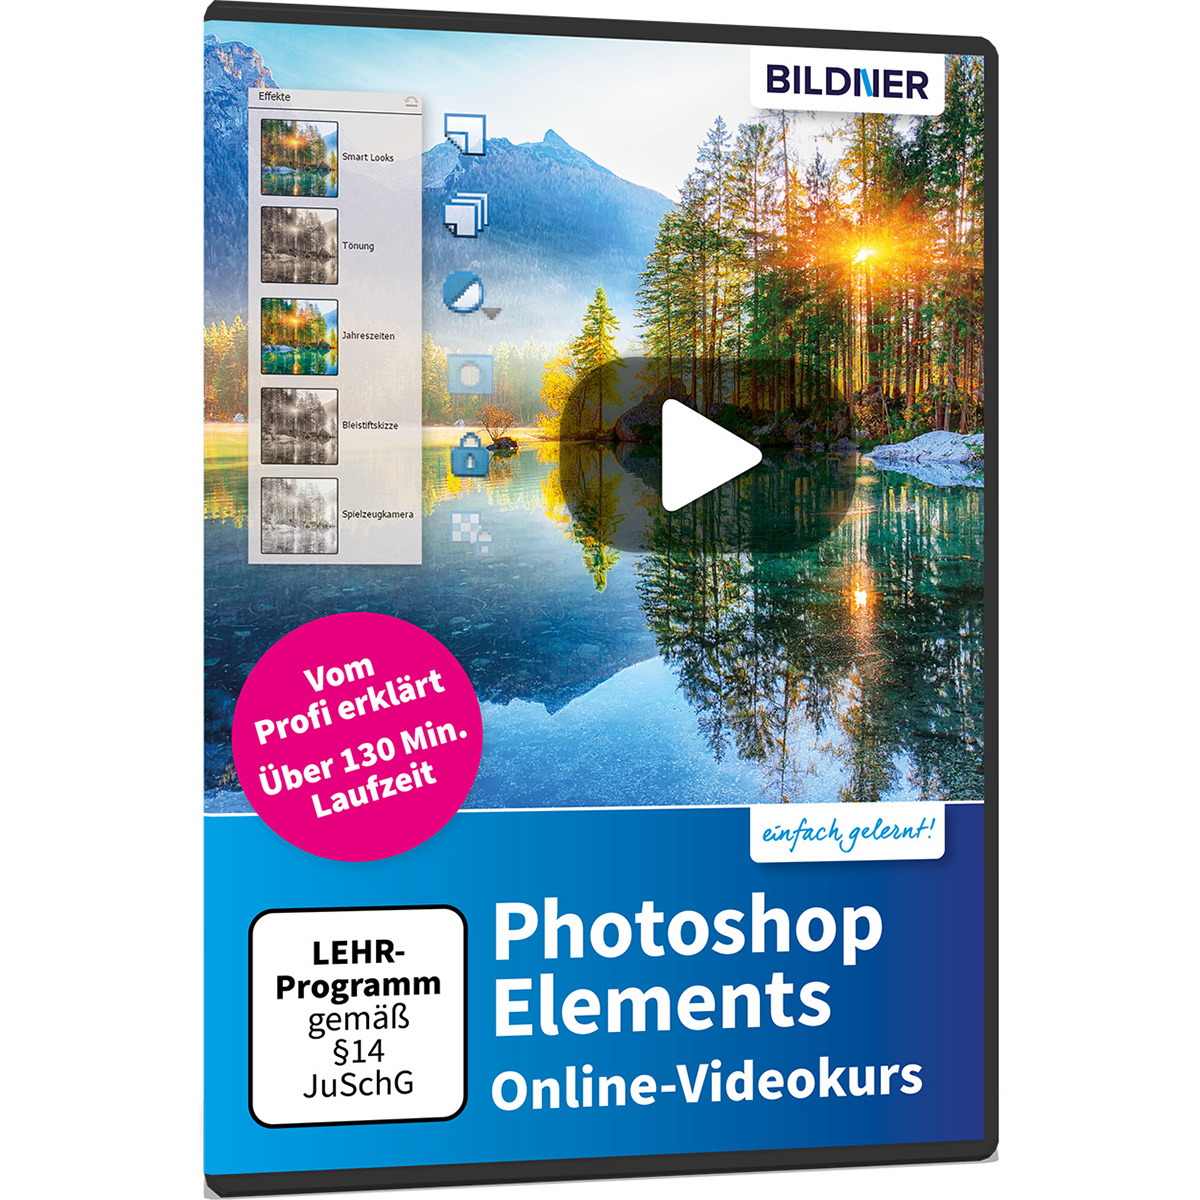 Card Key Elements Photoshop Online-Videokurs (PKC) Product